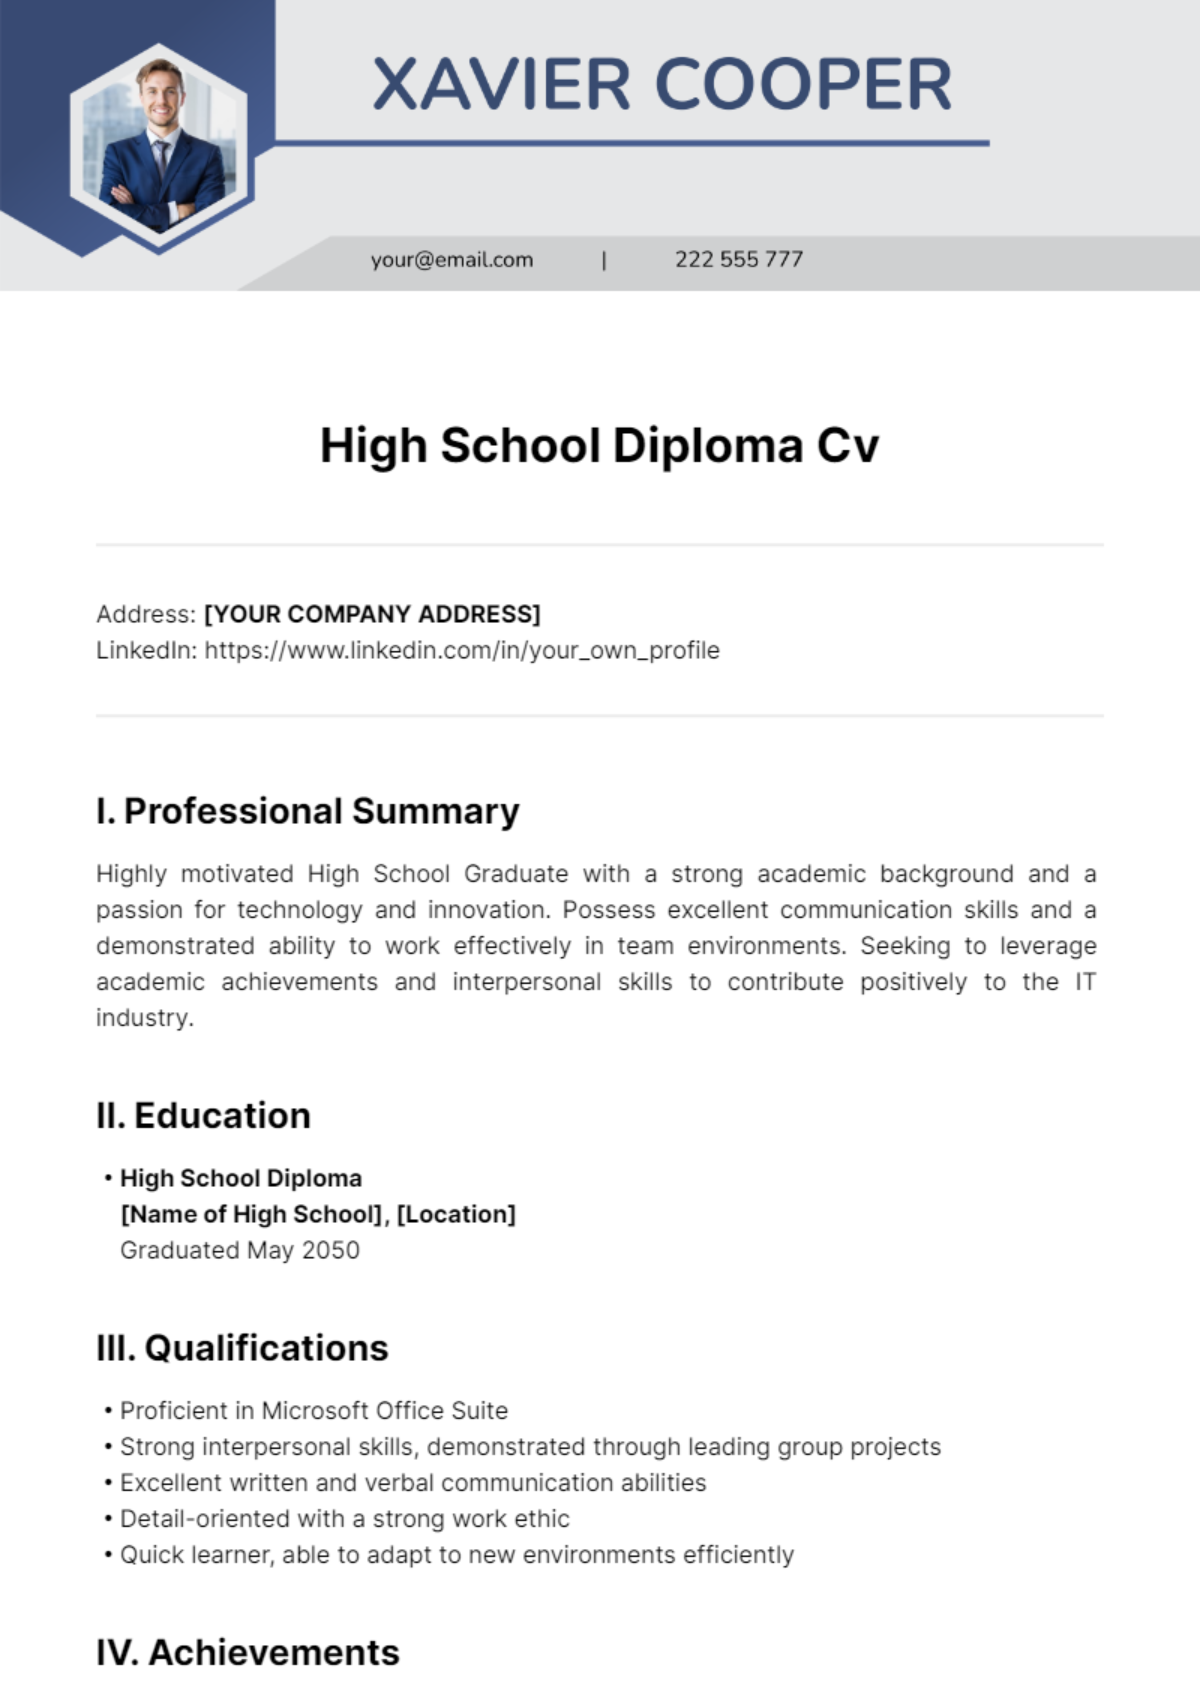 High School Diploma Cv Template